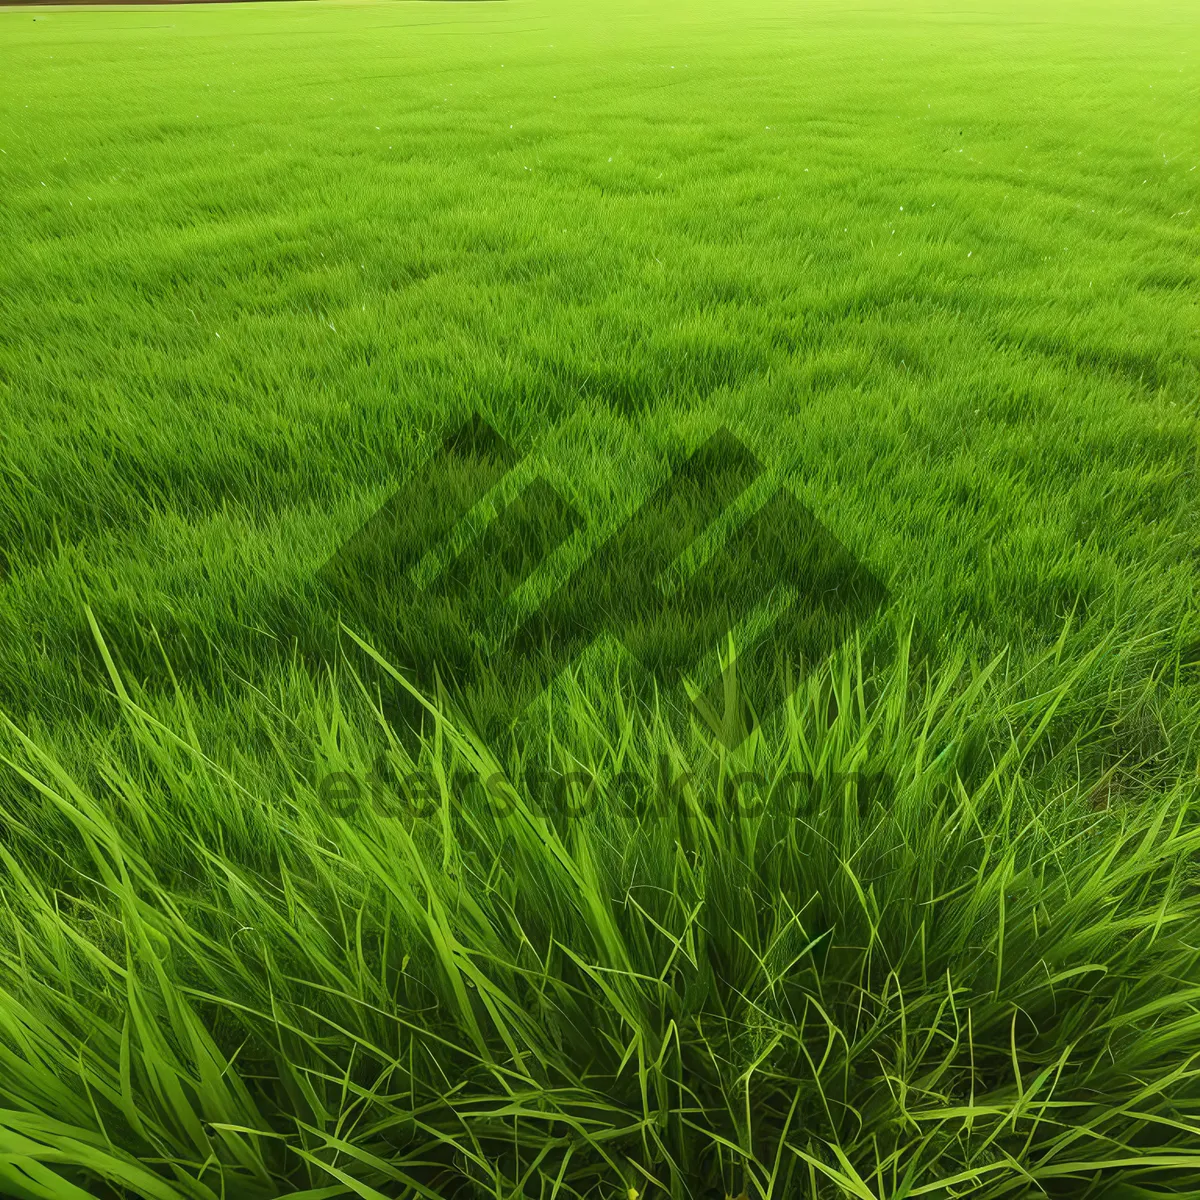 Picture of Bountiful Harvest: A Flourishing Wheat Field